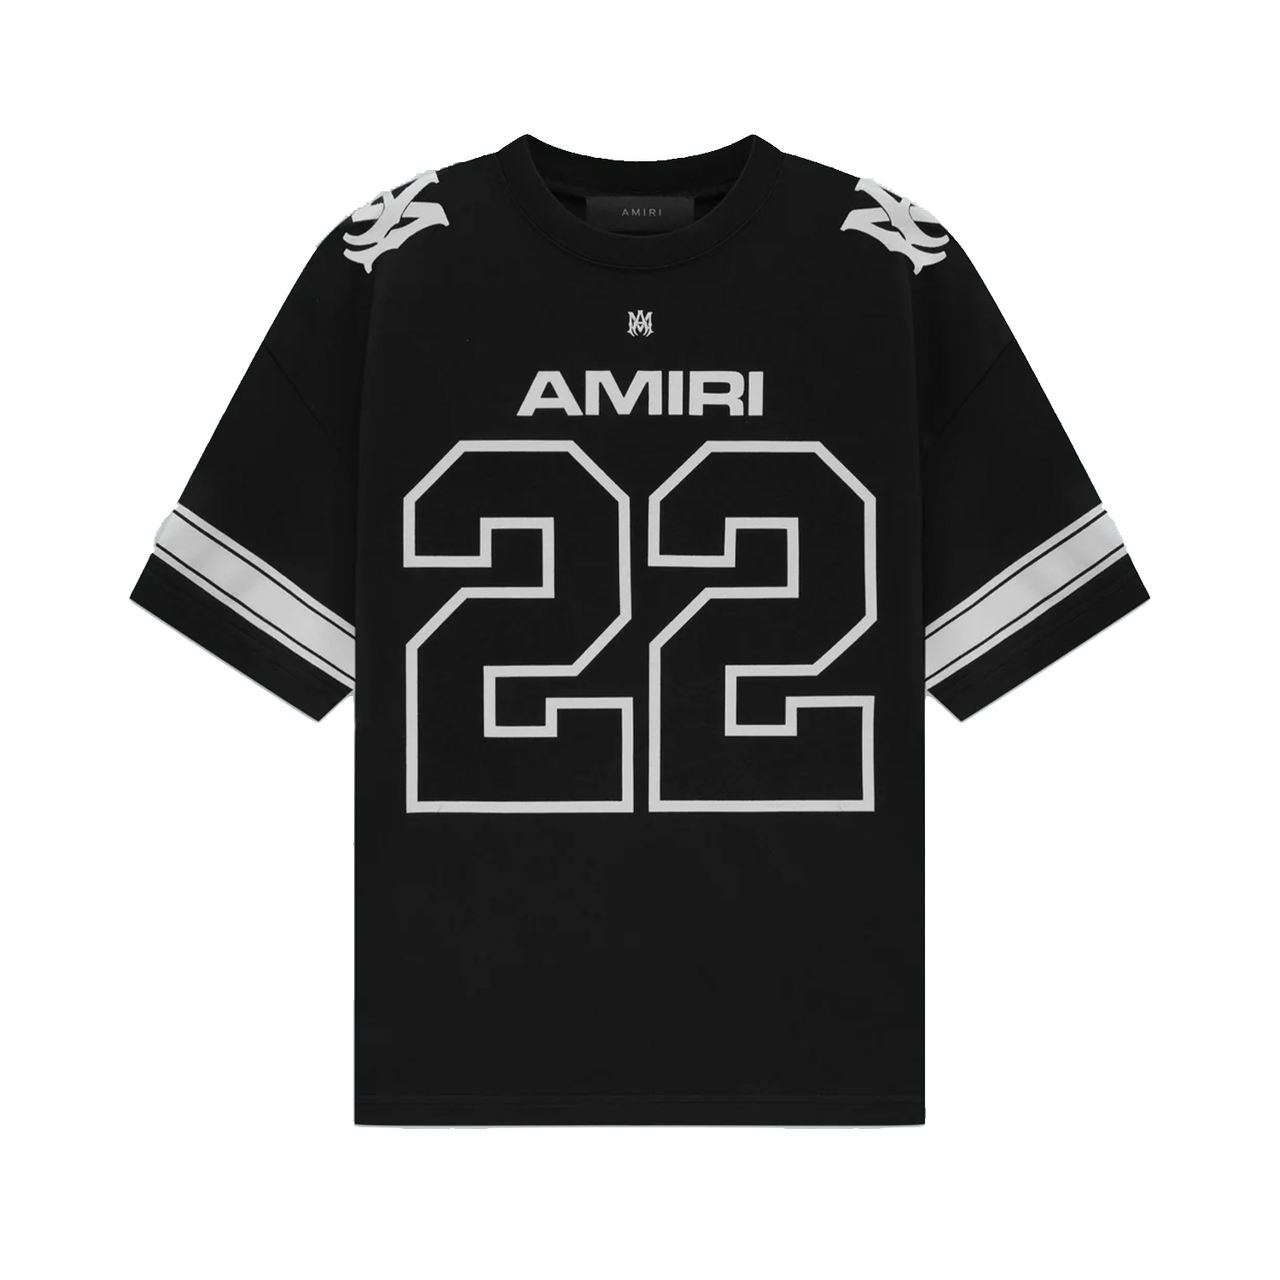 Amiri 22 Skater Tee Black